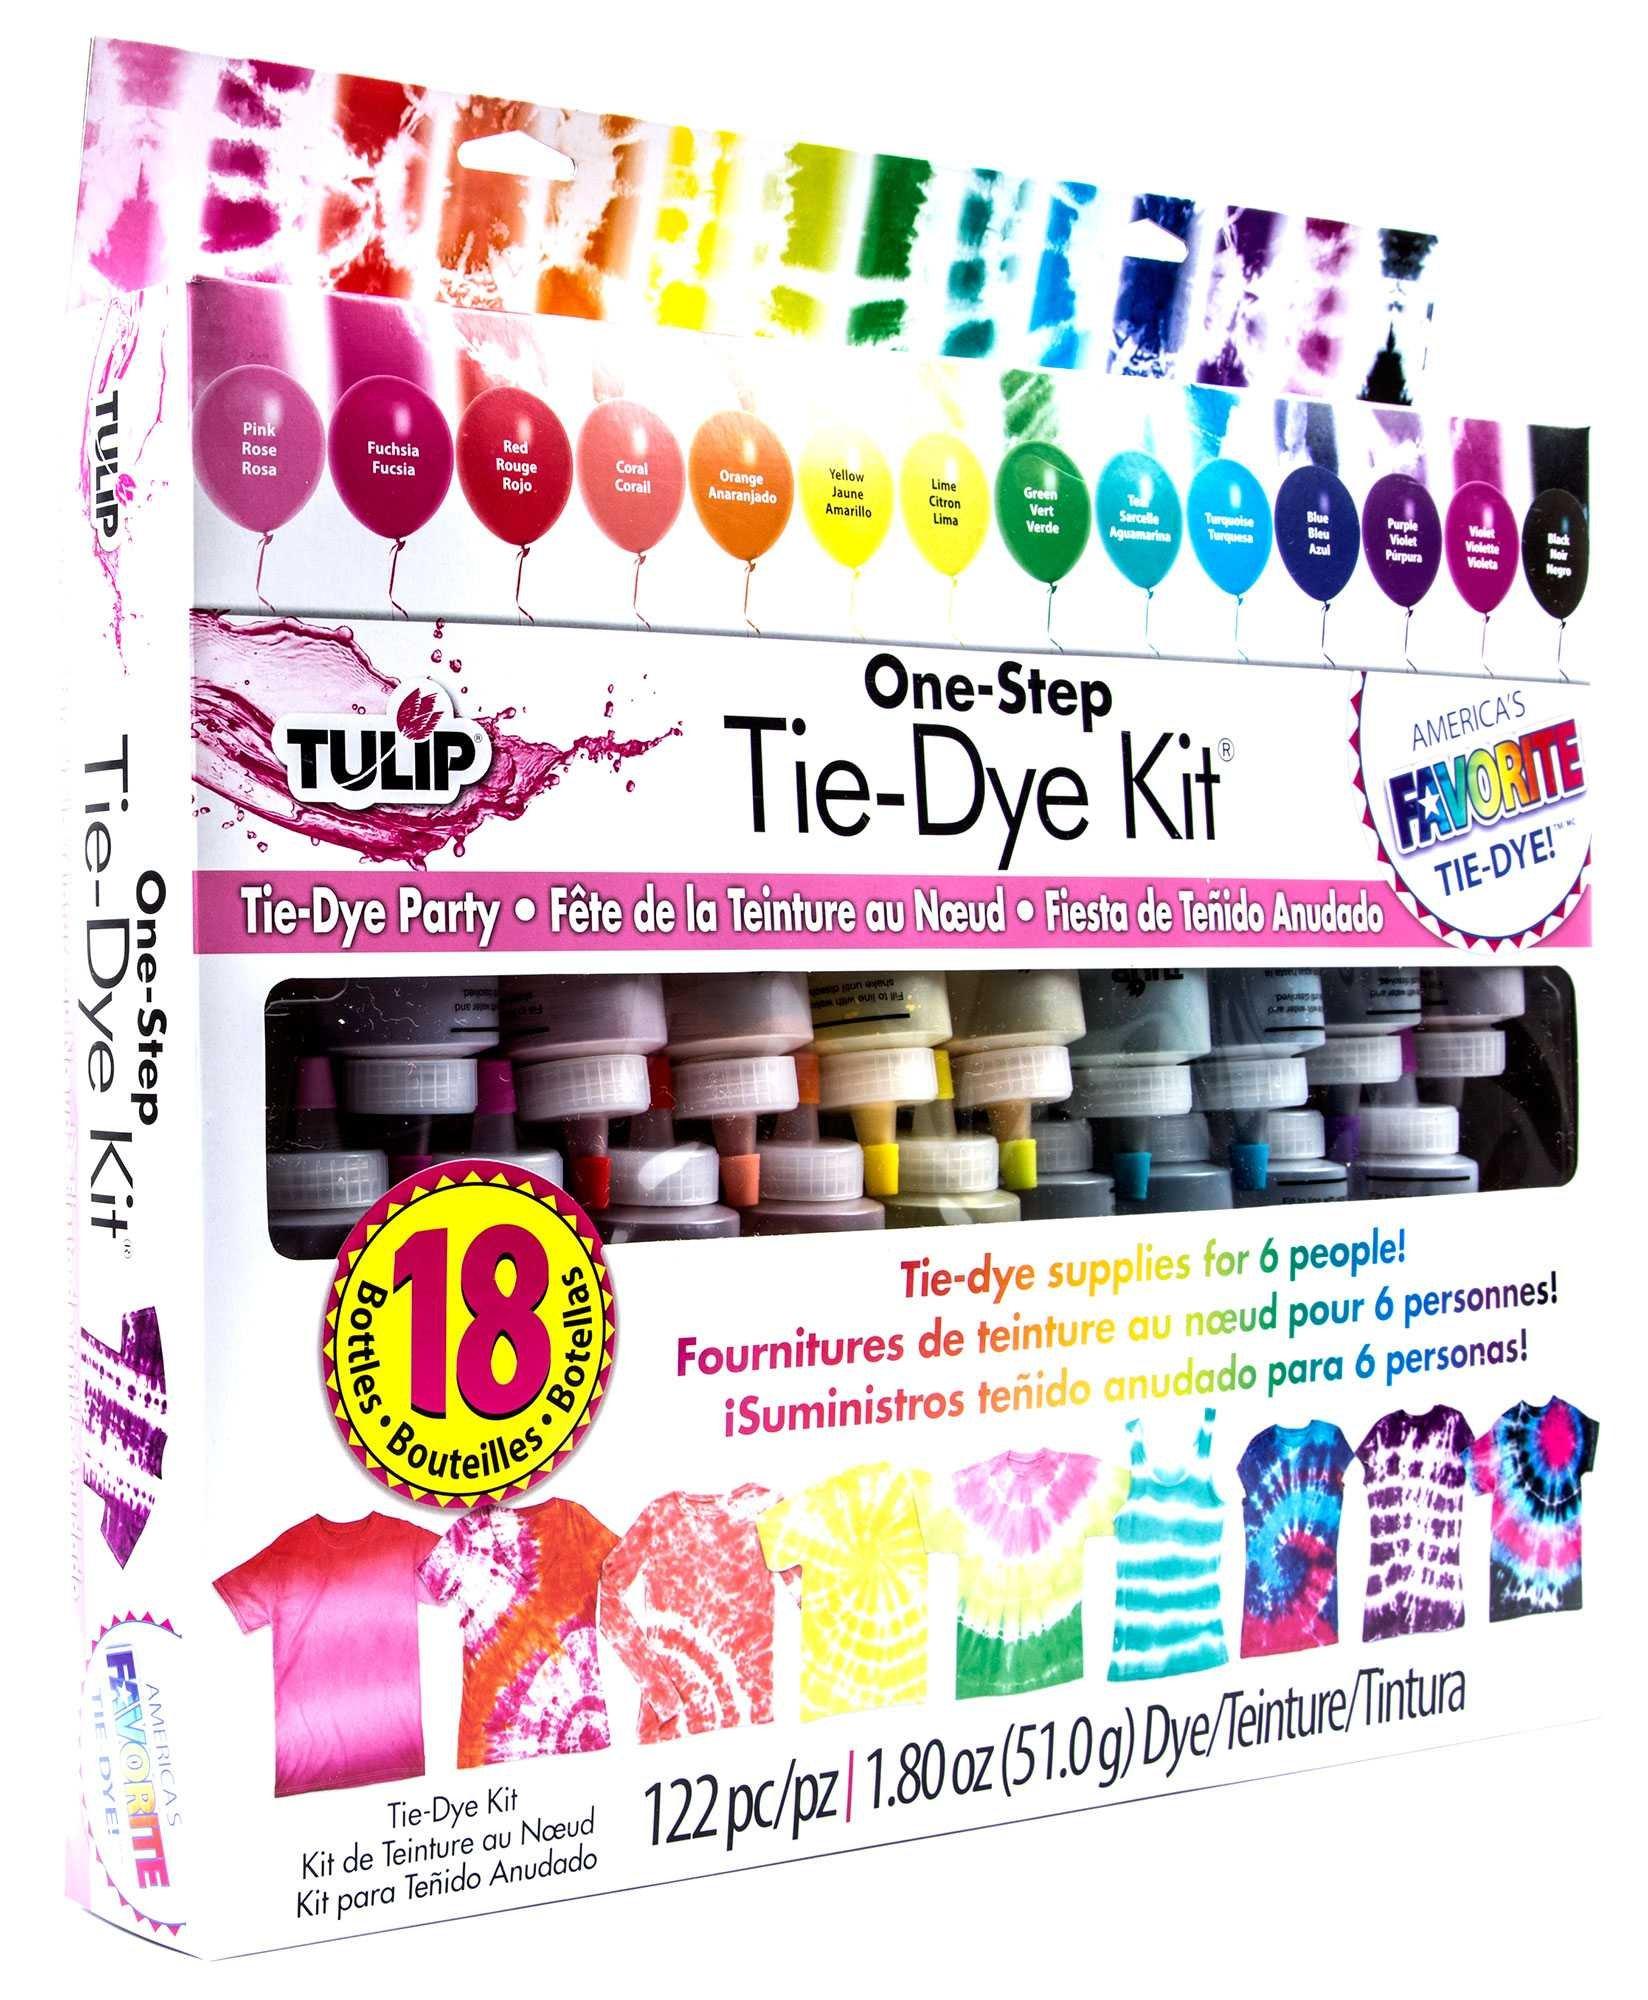 Tulip One-Step Ice Tie-Dye Kit